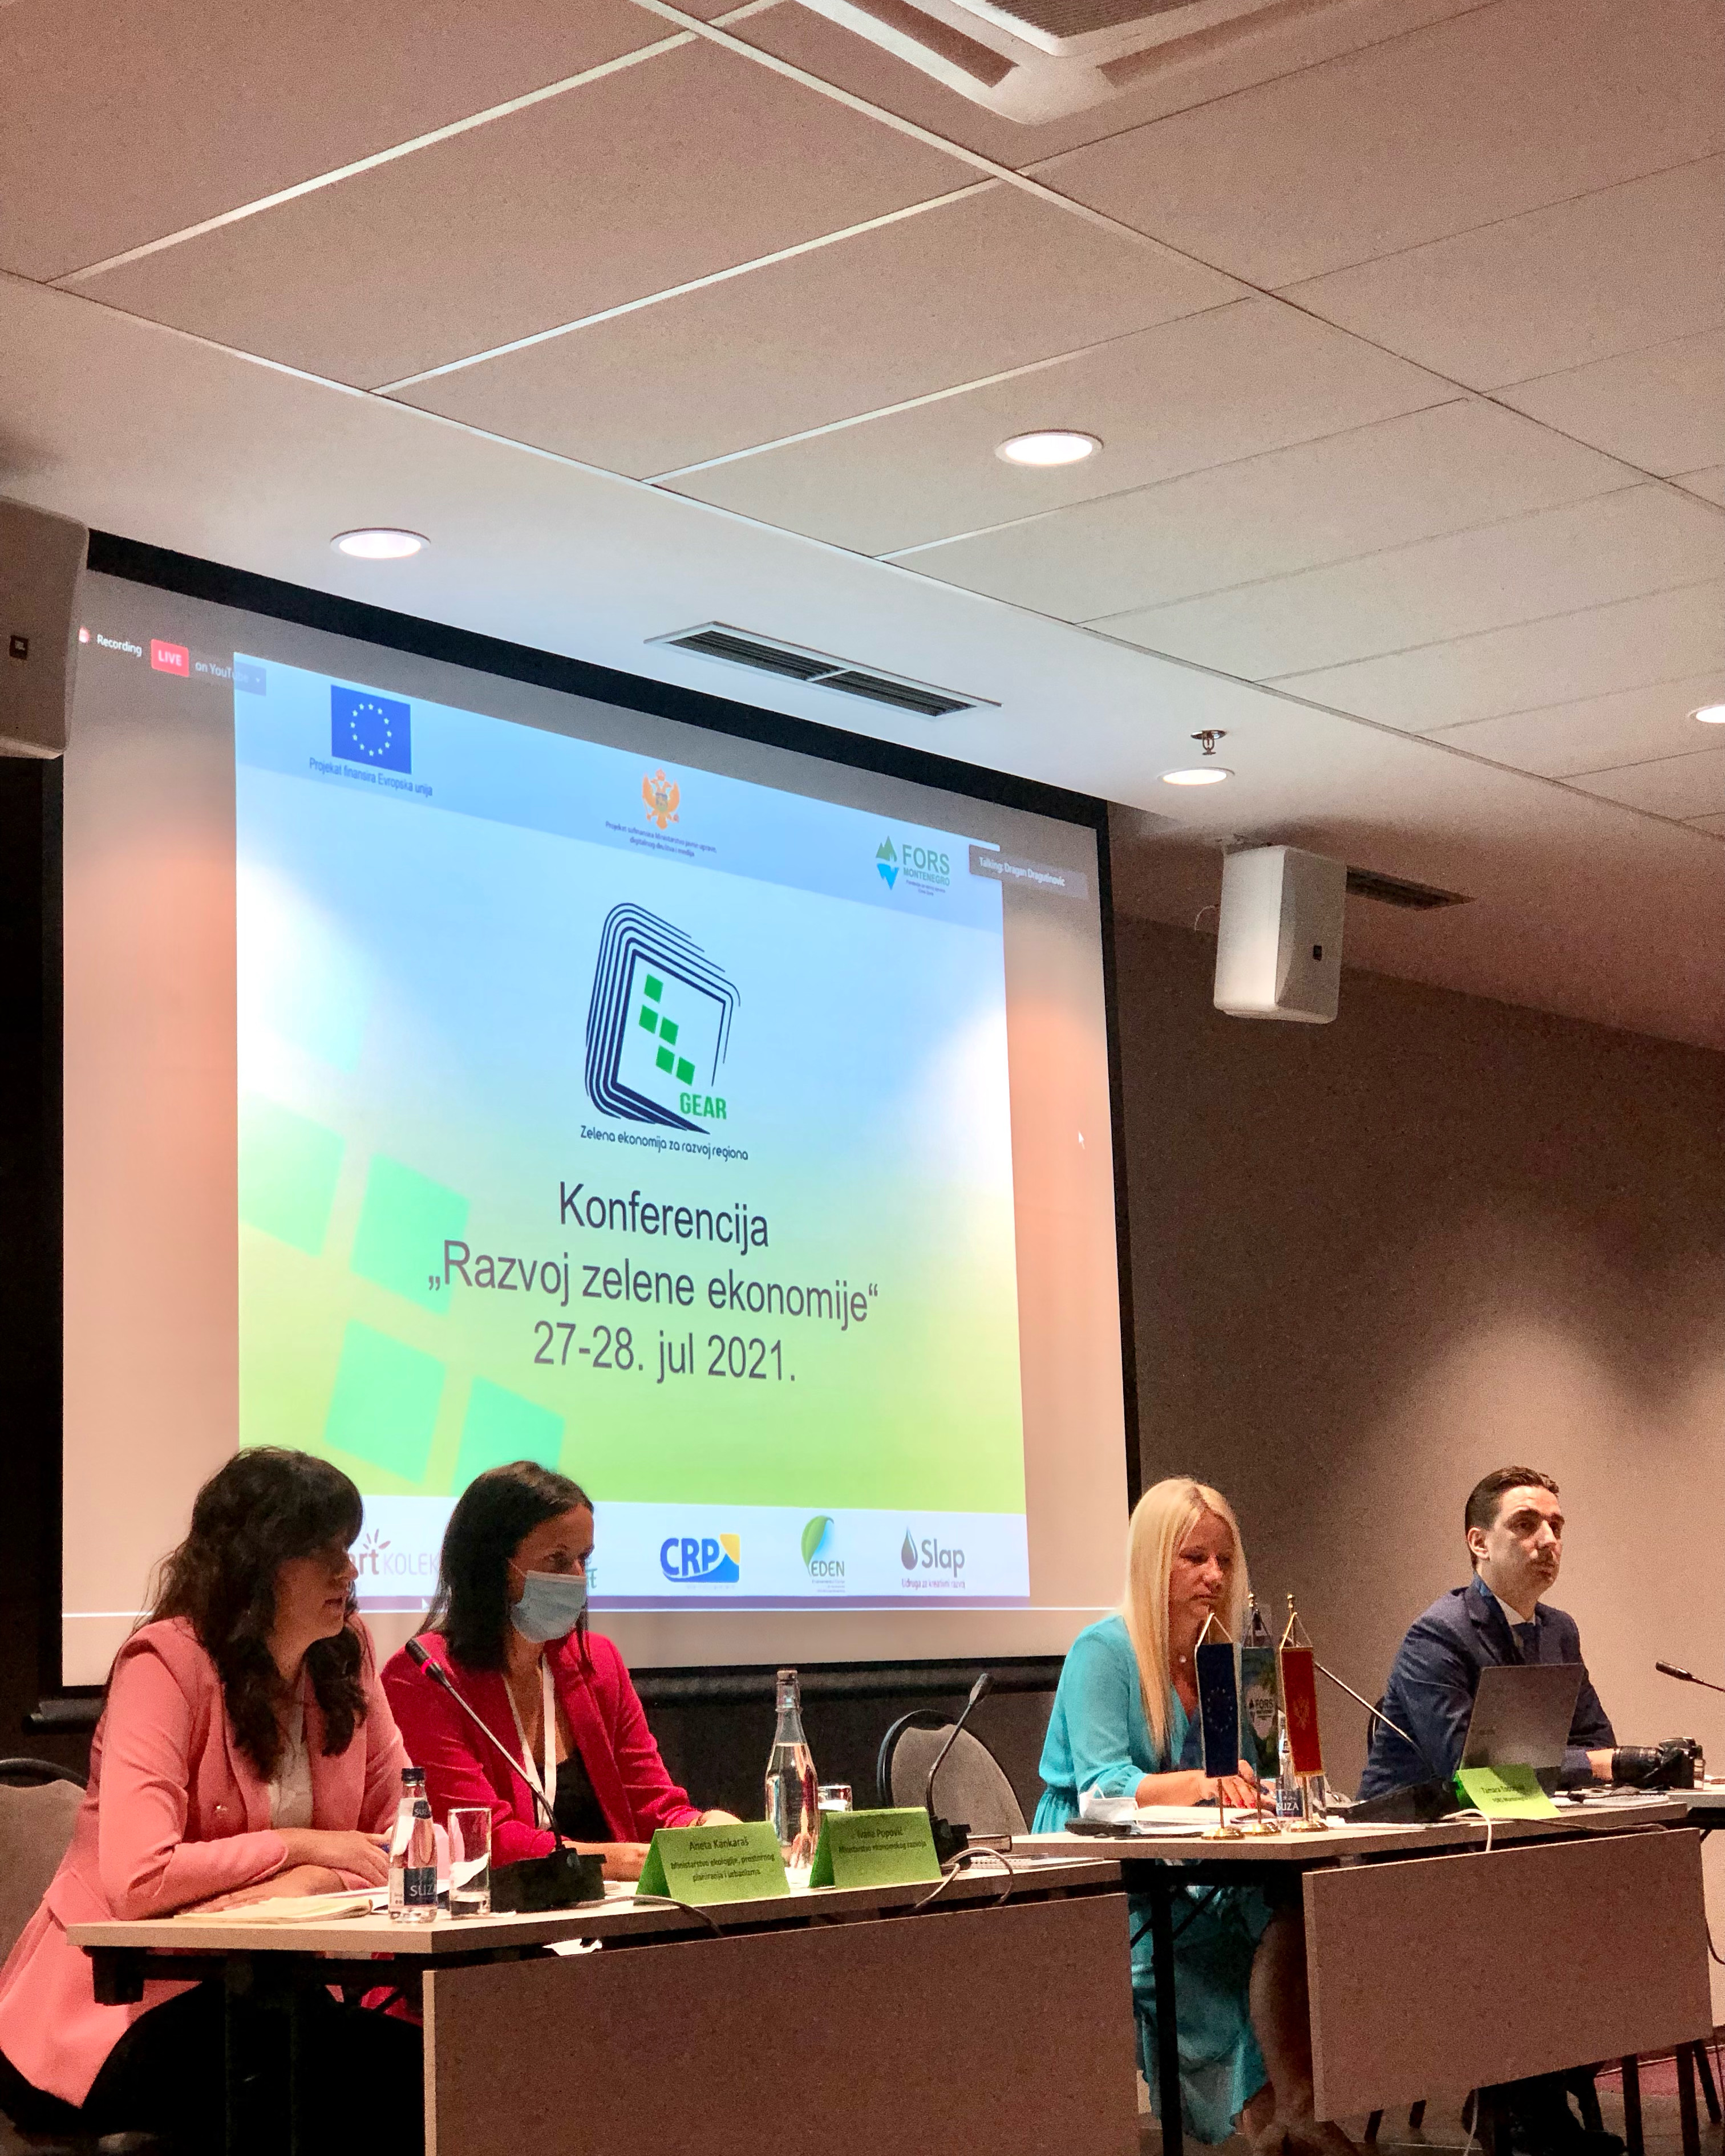 Glavni grad Podgorica na konferenciji “Razvoj zelene ekonomije”